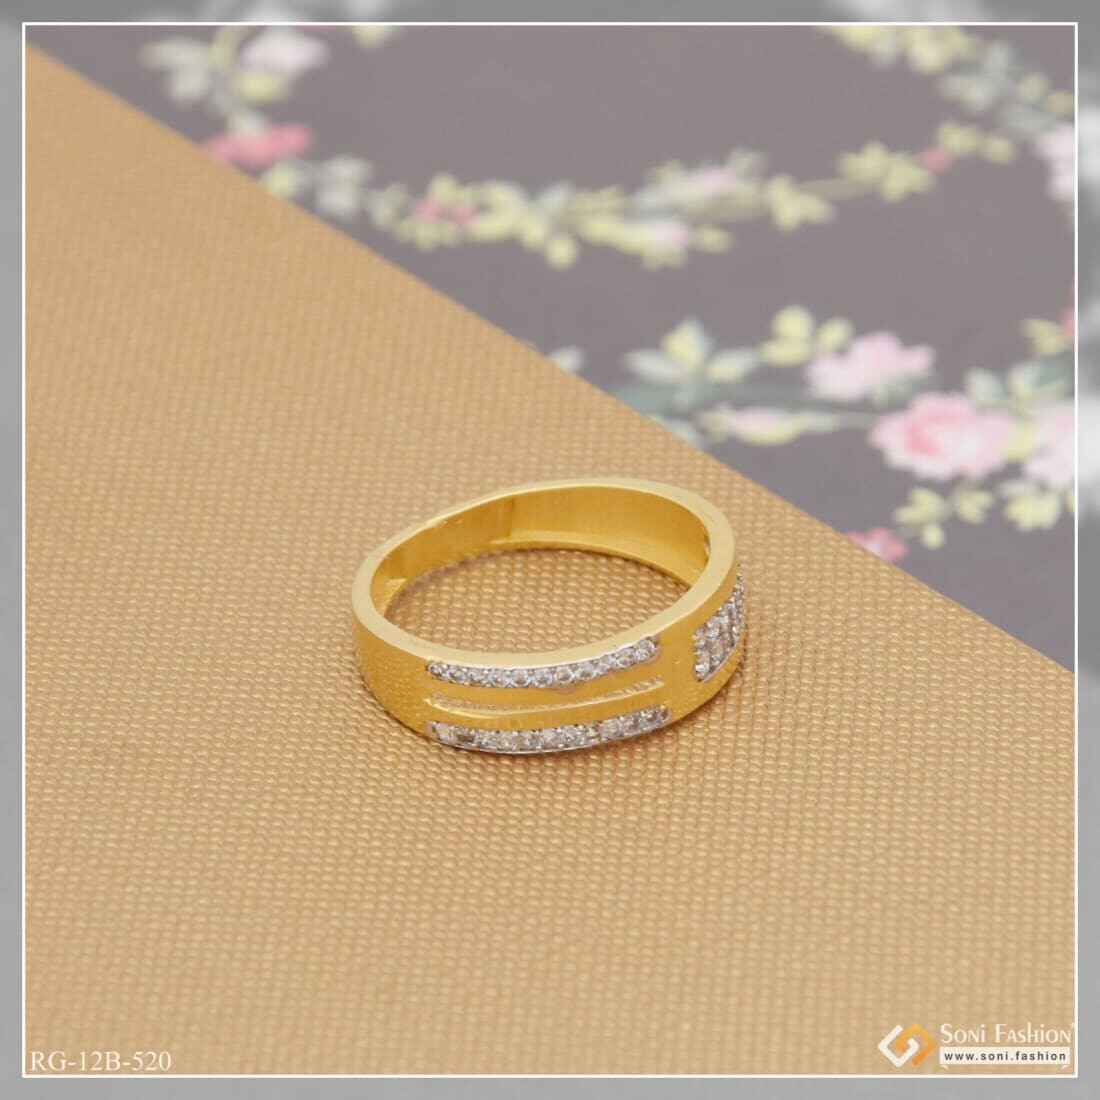 Glamorous Ridged Gold Ring for Men | SEHGAL GOLD ORNAMENTS PVT. LTD.